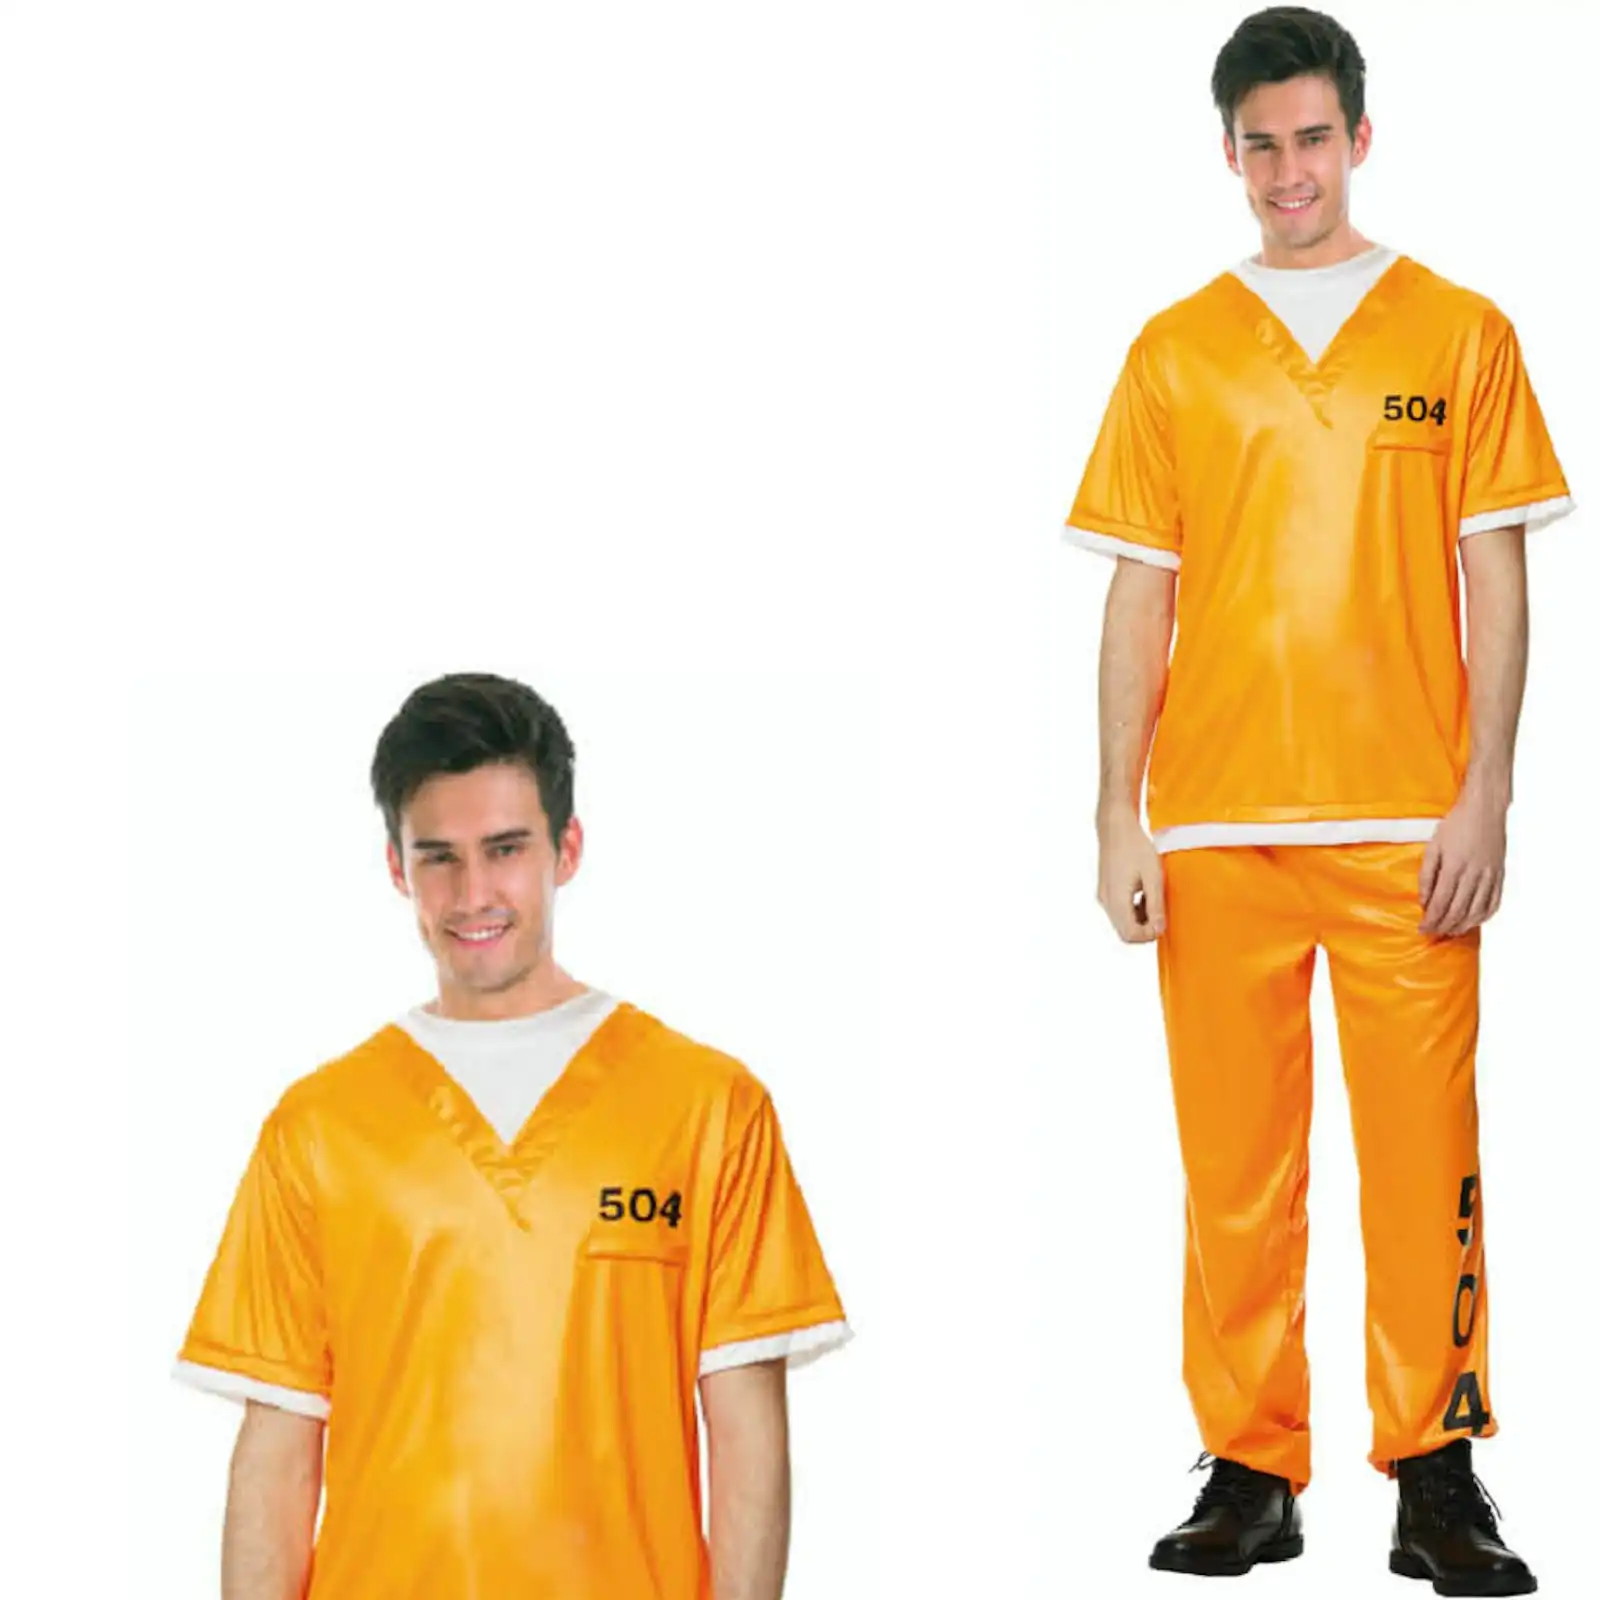 PRISONER COSTUME Halloween Jail Convict Adult Complete Outfit - Orange